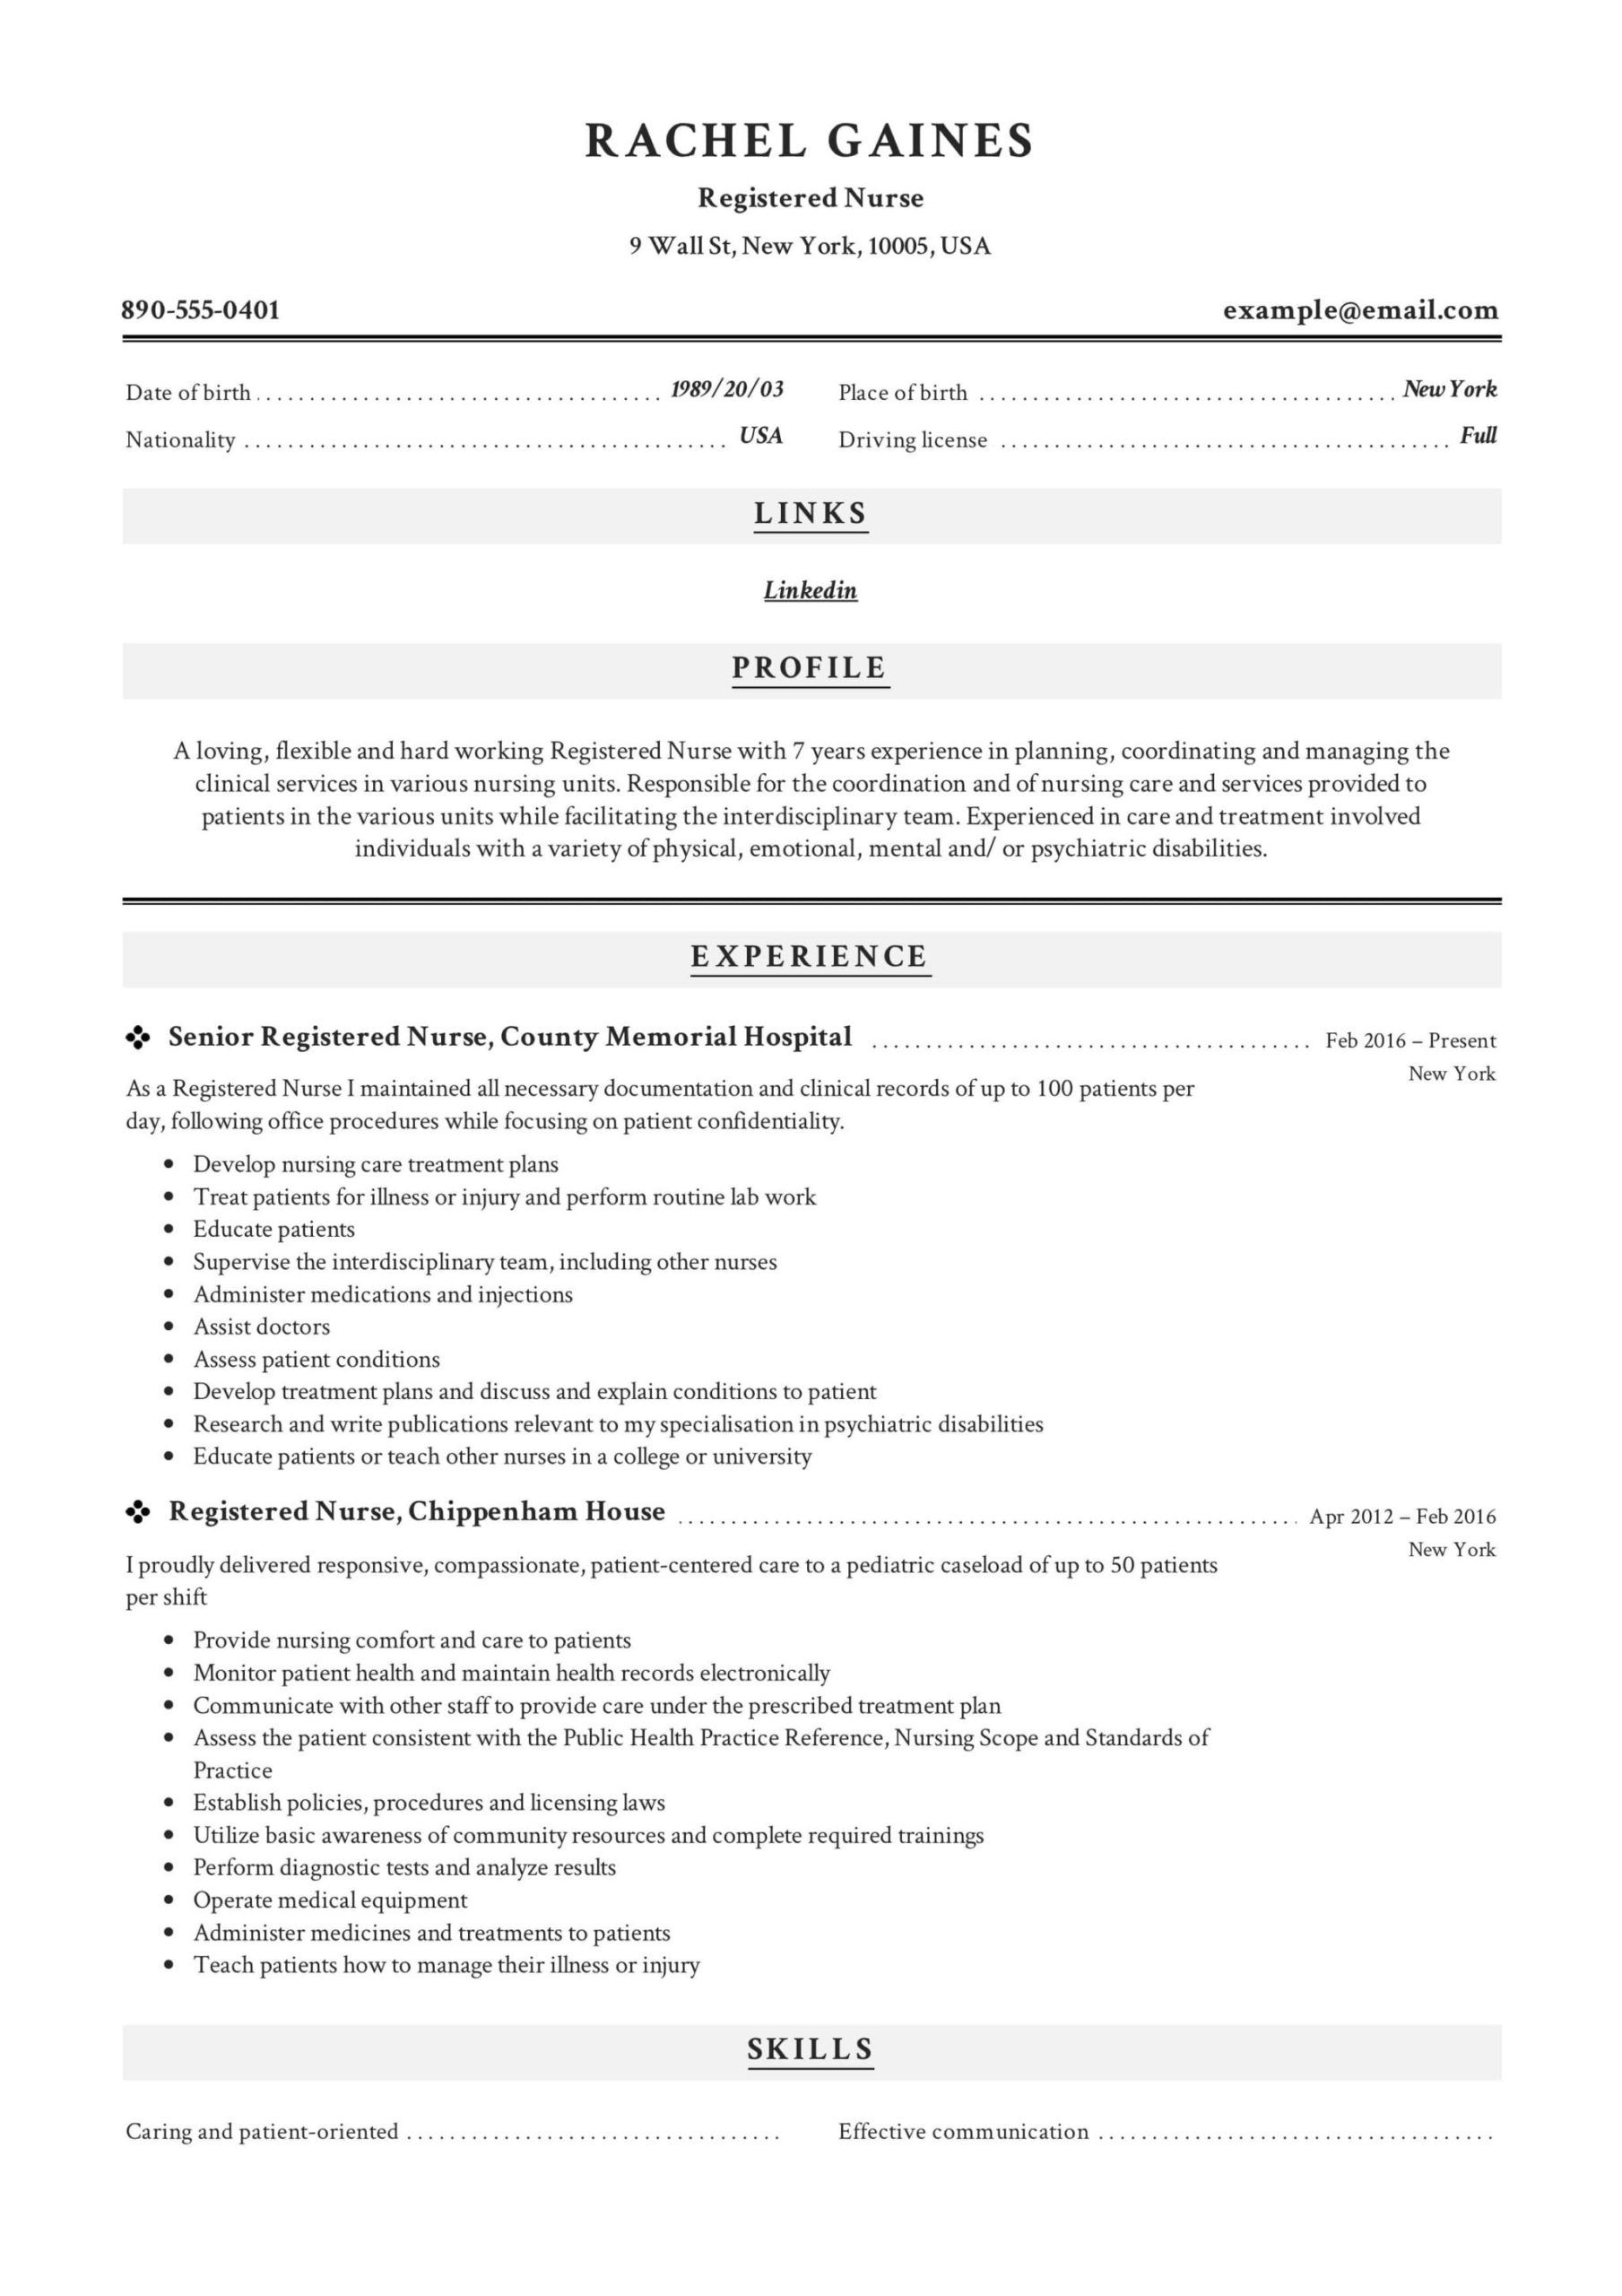 Sample Functional Resume Post Nursing School Registered Nurse Resume Examples & Writing Guide  12 Samples Pdf